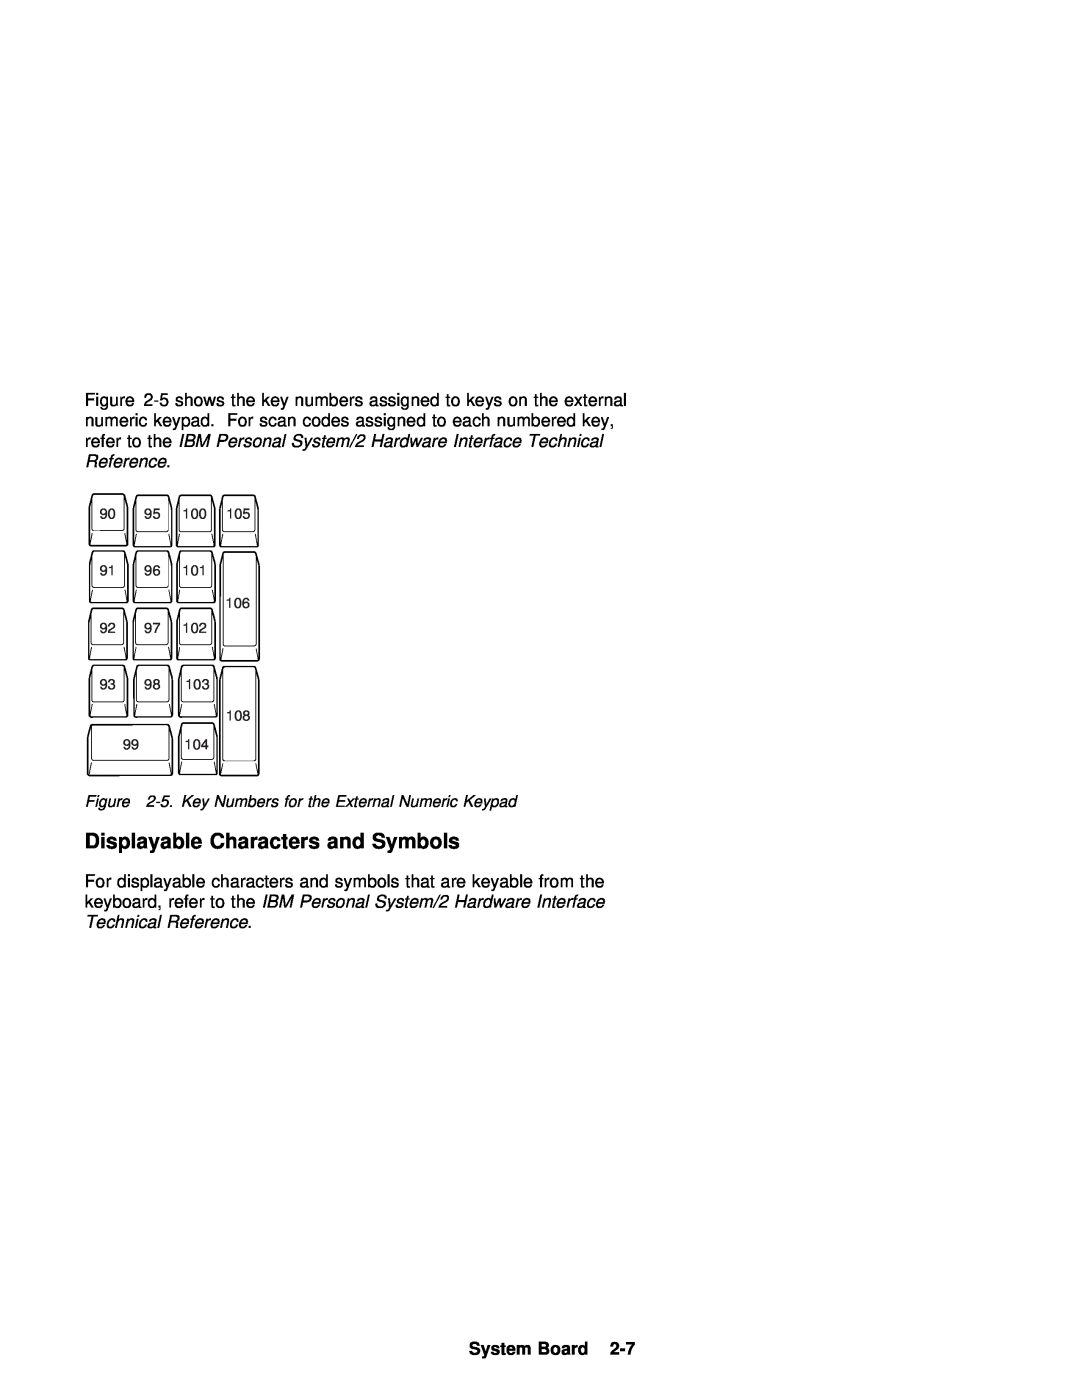 IBM 770 manual Displayable Characters and Symbols, System Board 